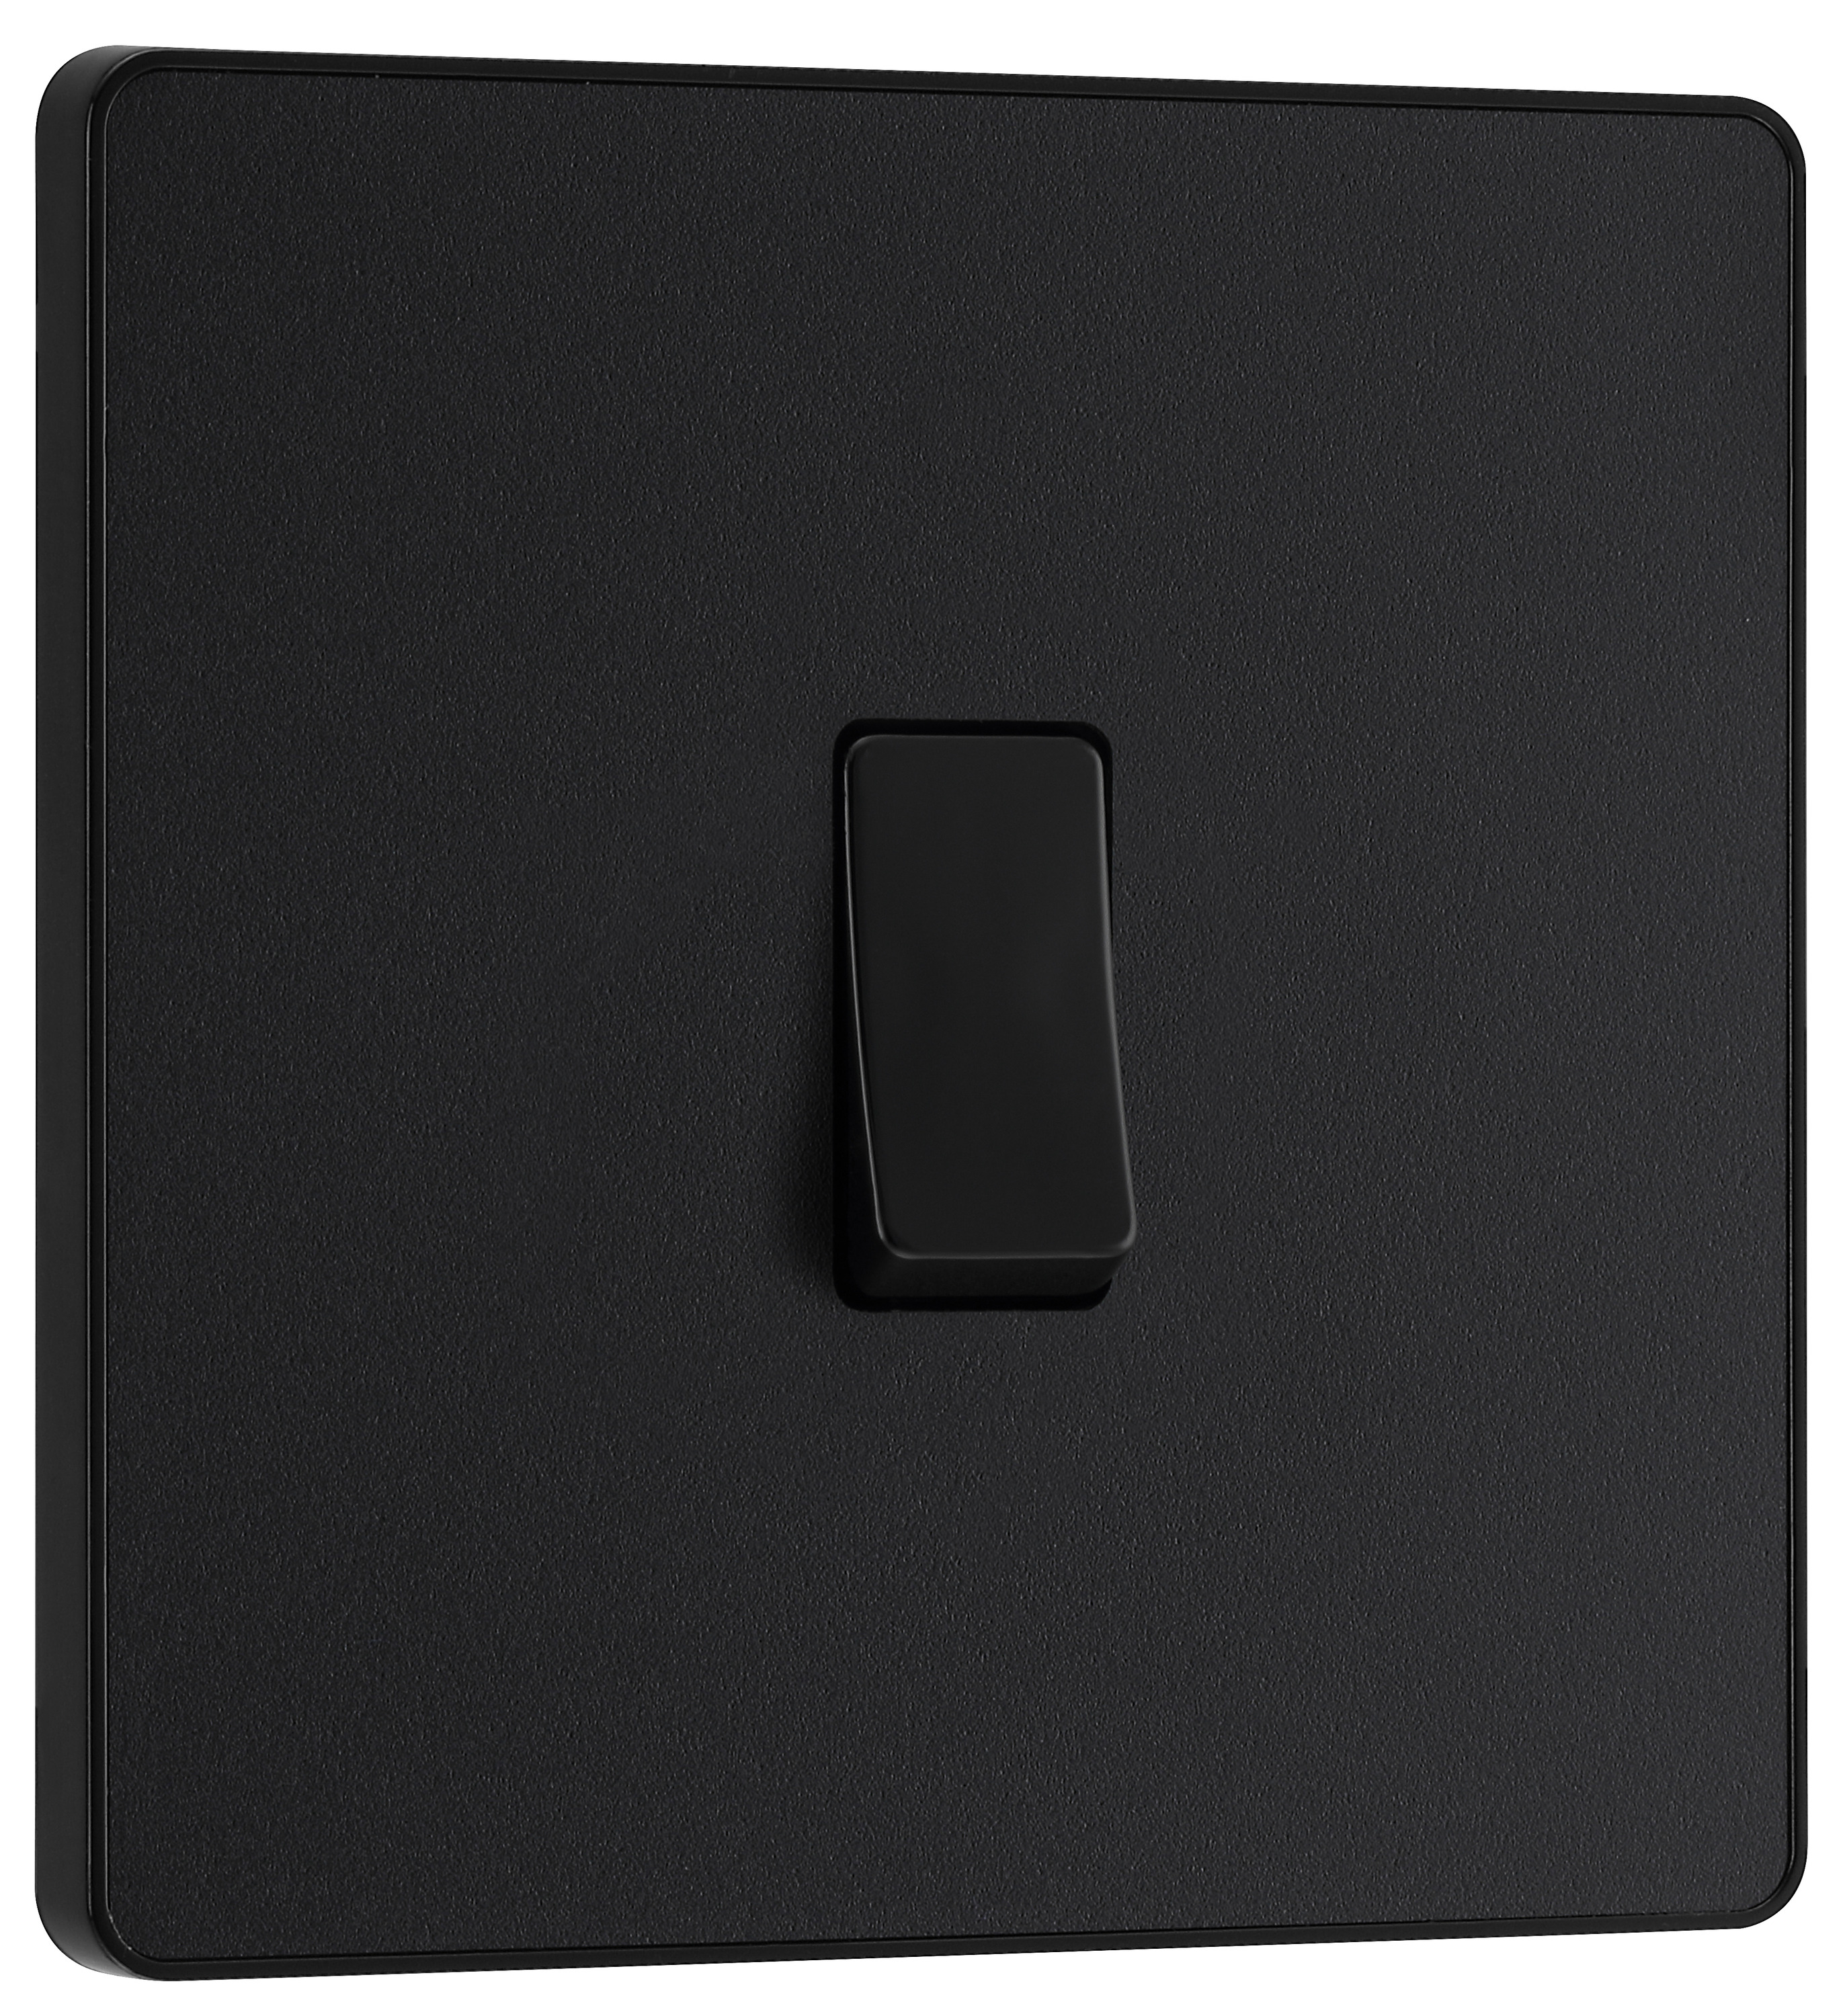 Image of BG Evolve Matt Black 20A 16Ax Single Intermediate Light Switch